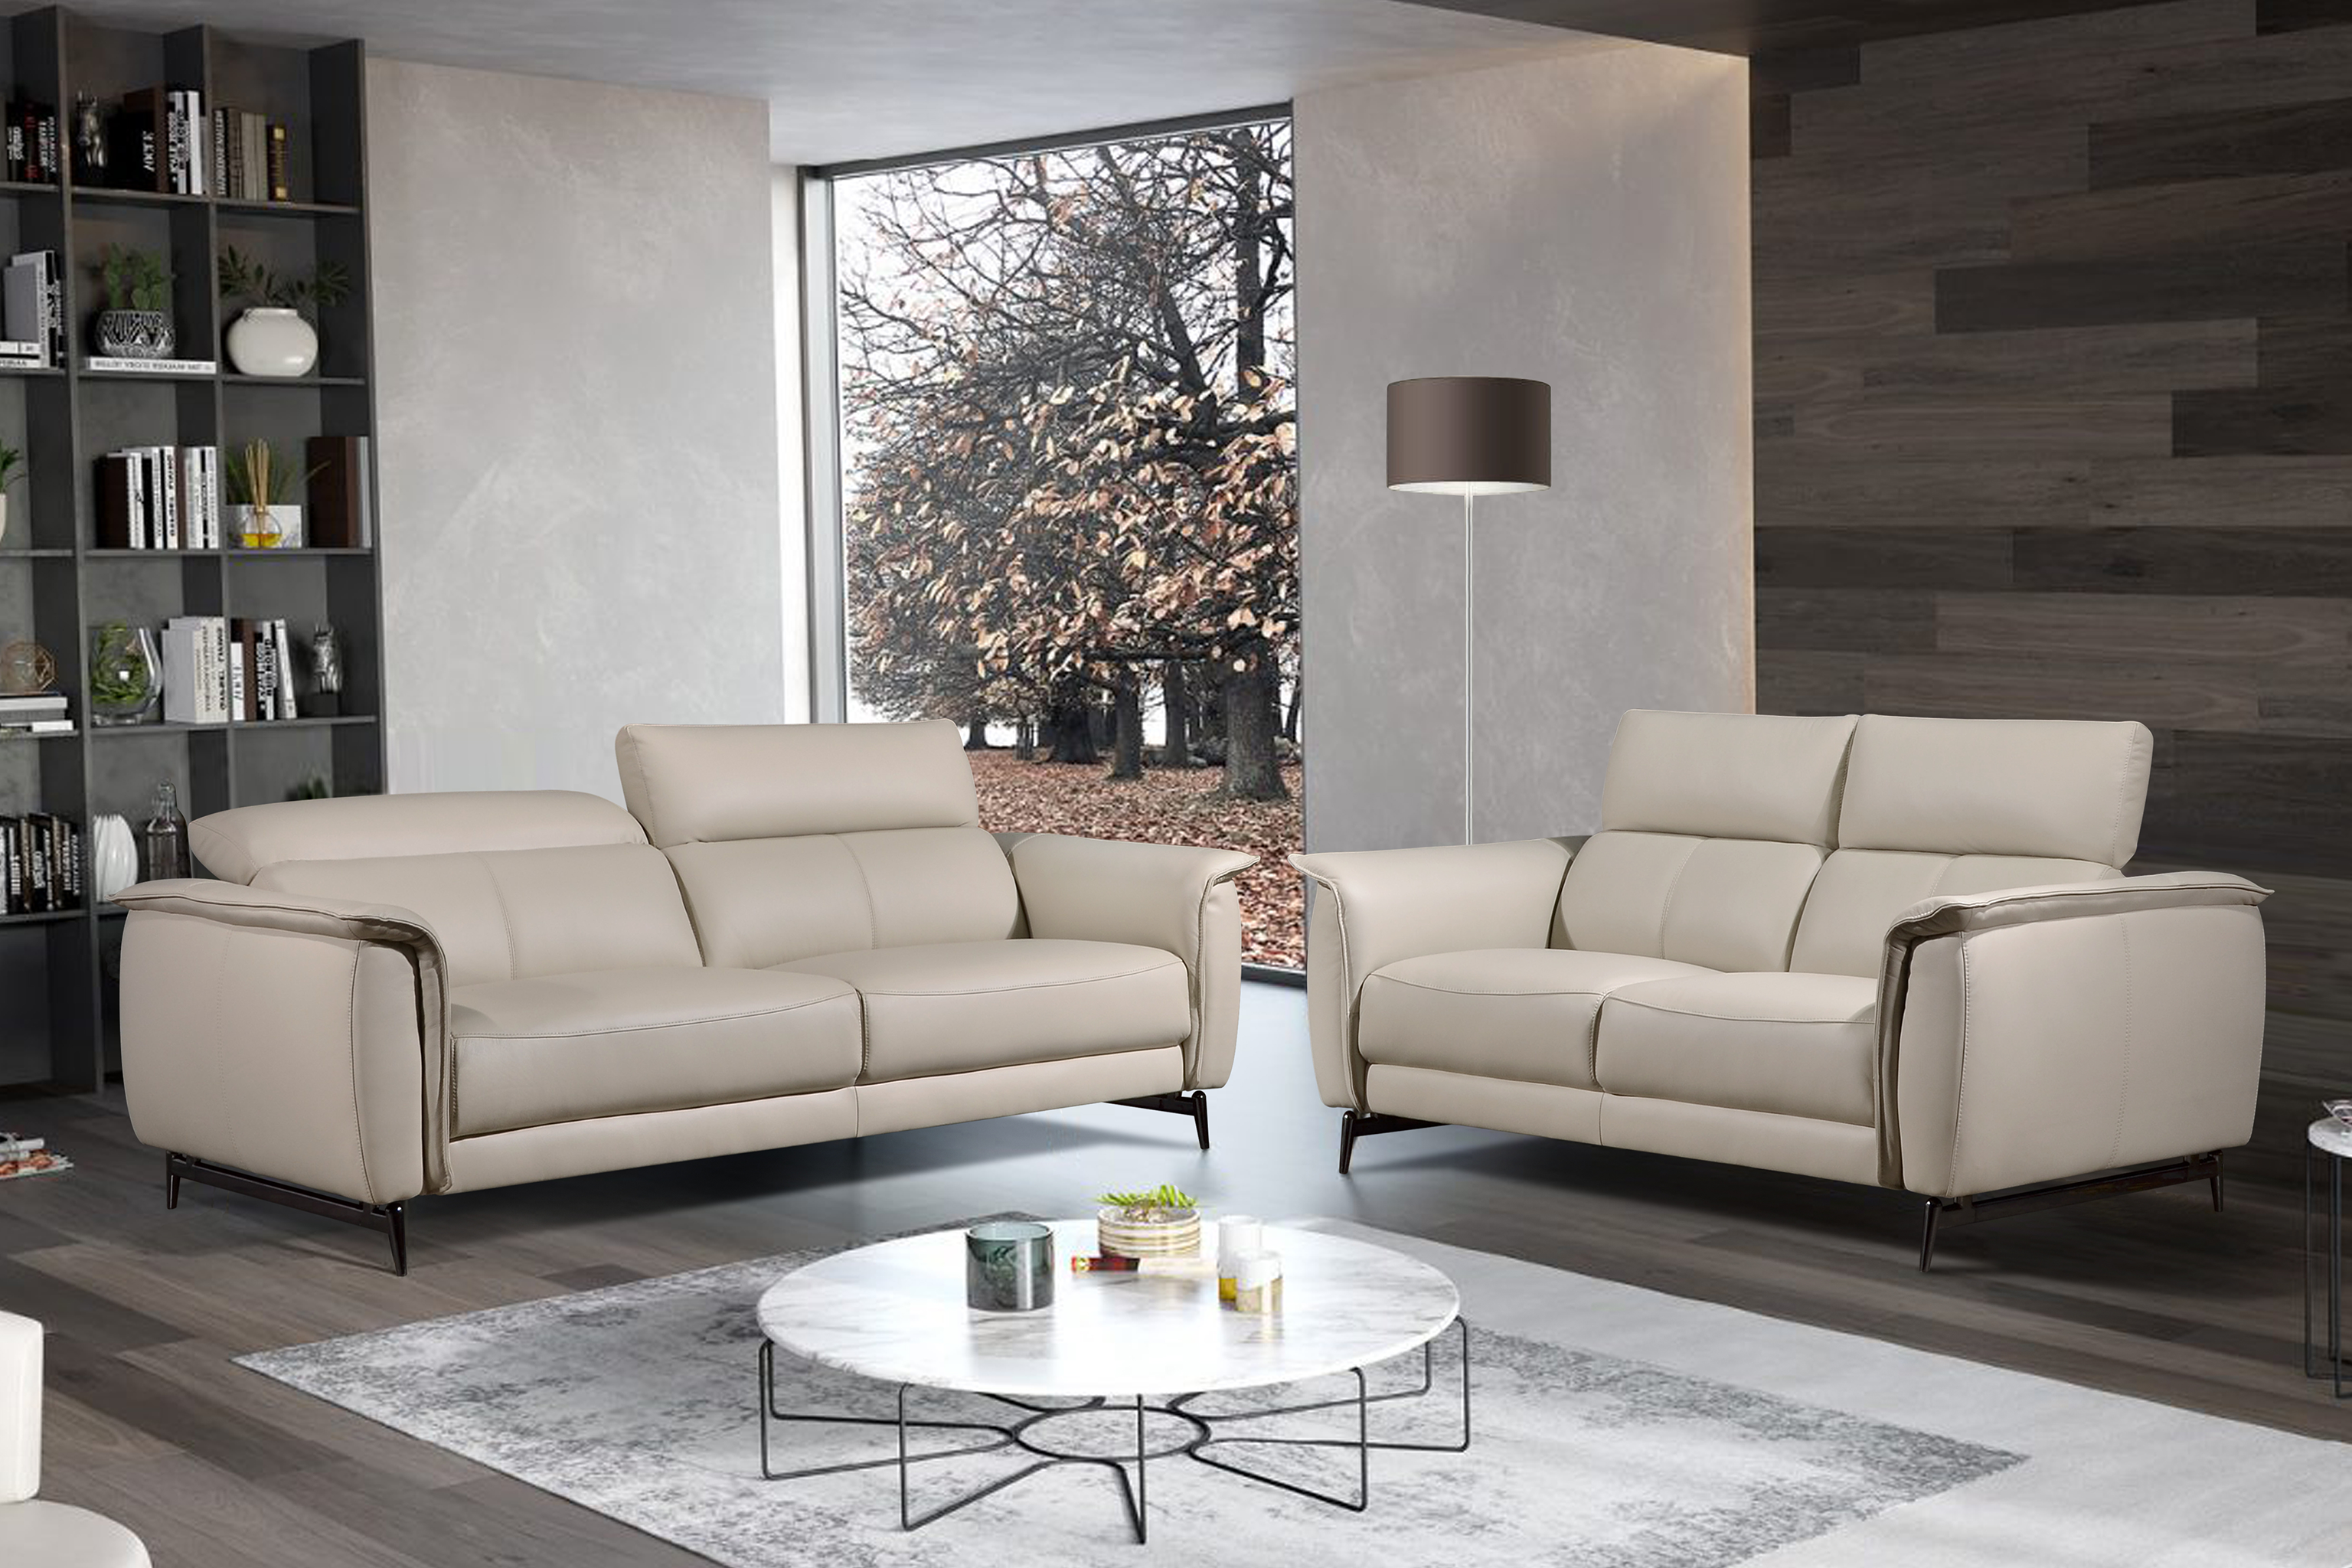 RIVIERA Made-in-Italy Top-Grain Leather Sofa by Castilla